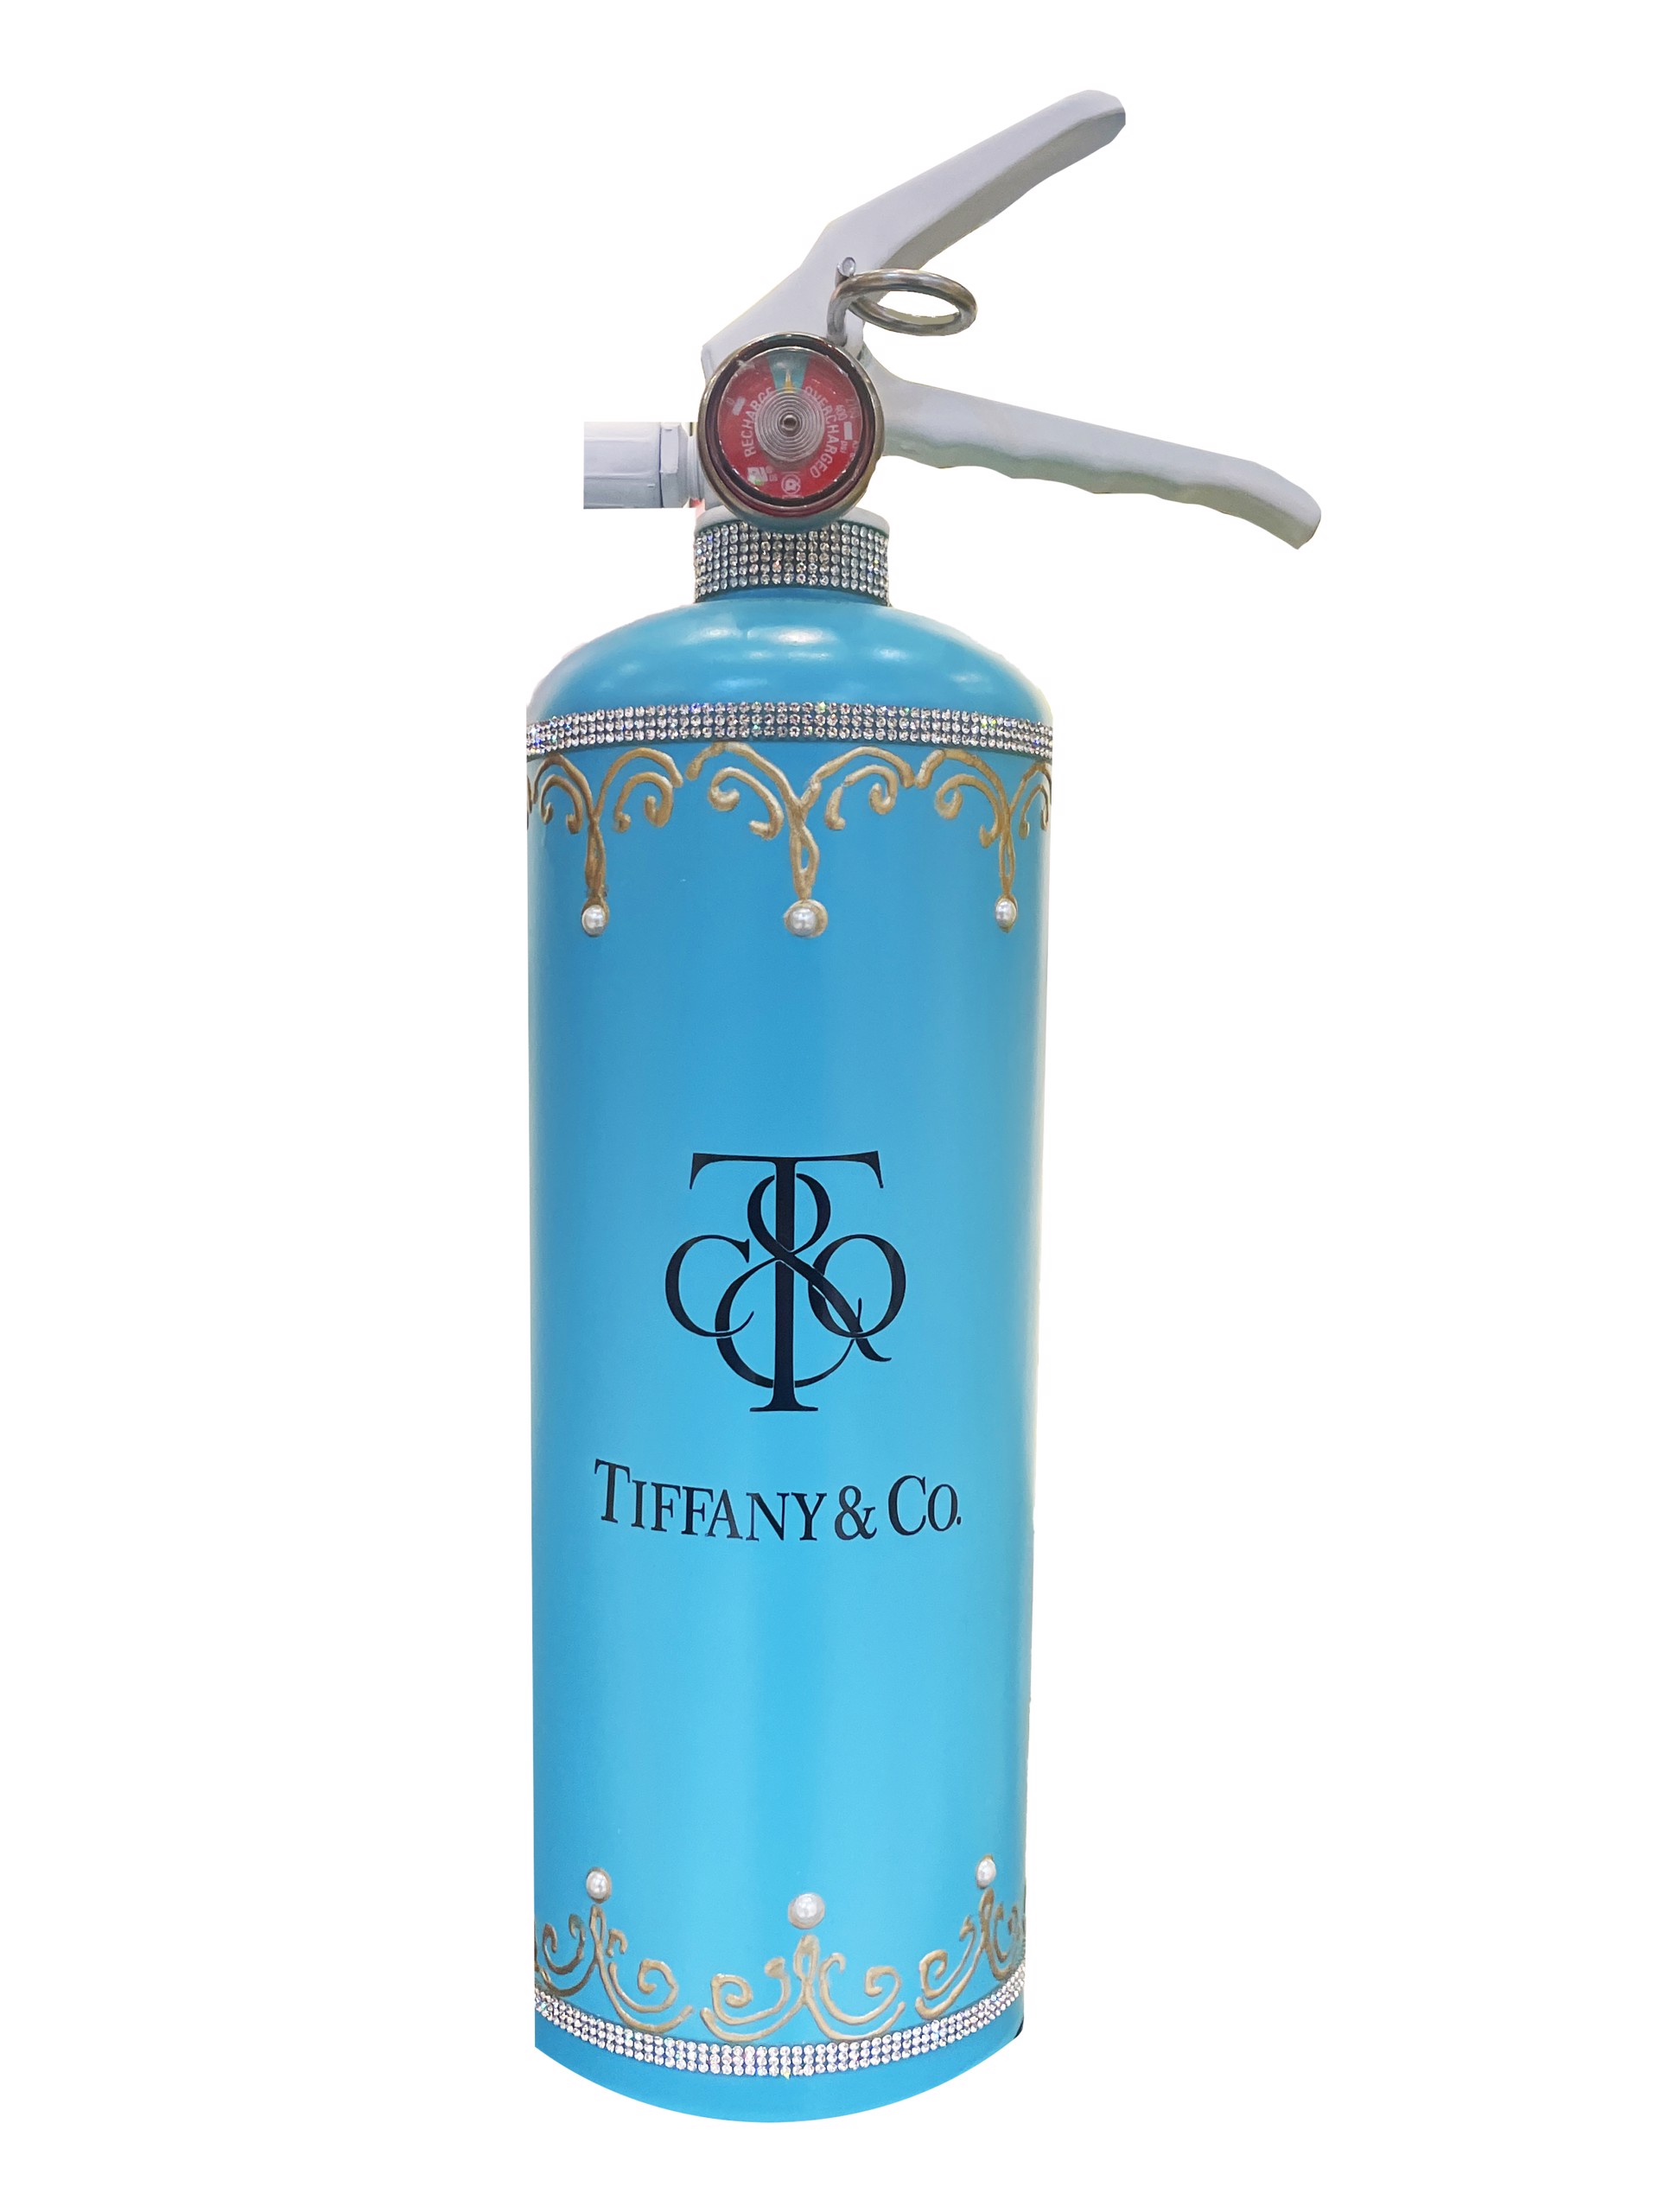 Tiffany Fire Extinguisher by David Mir